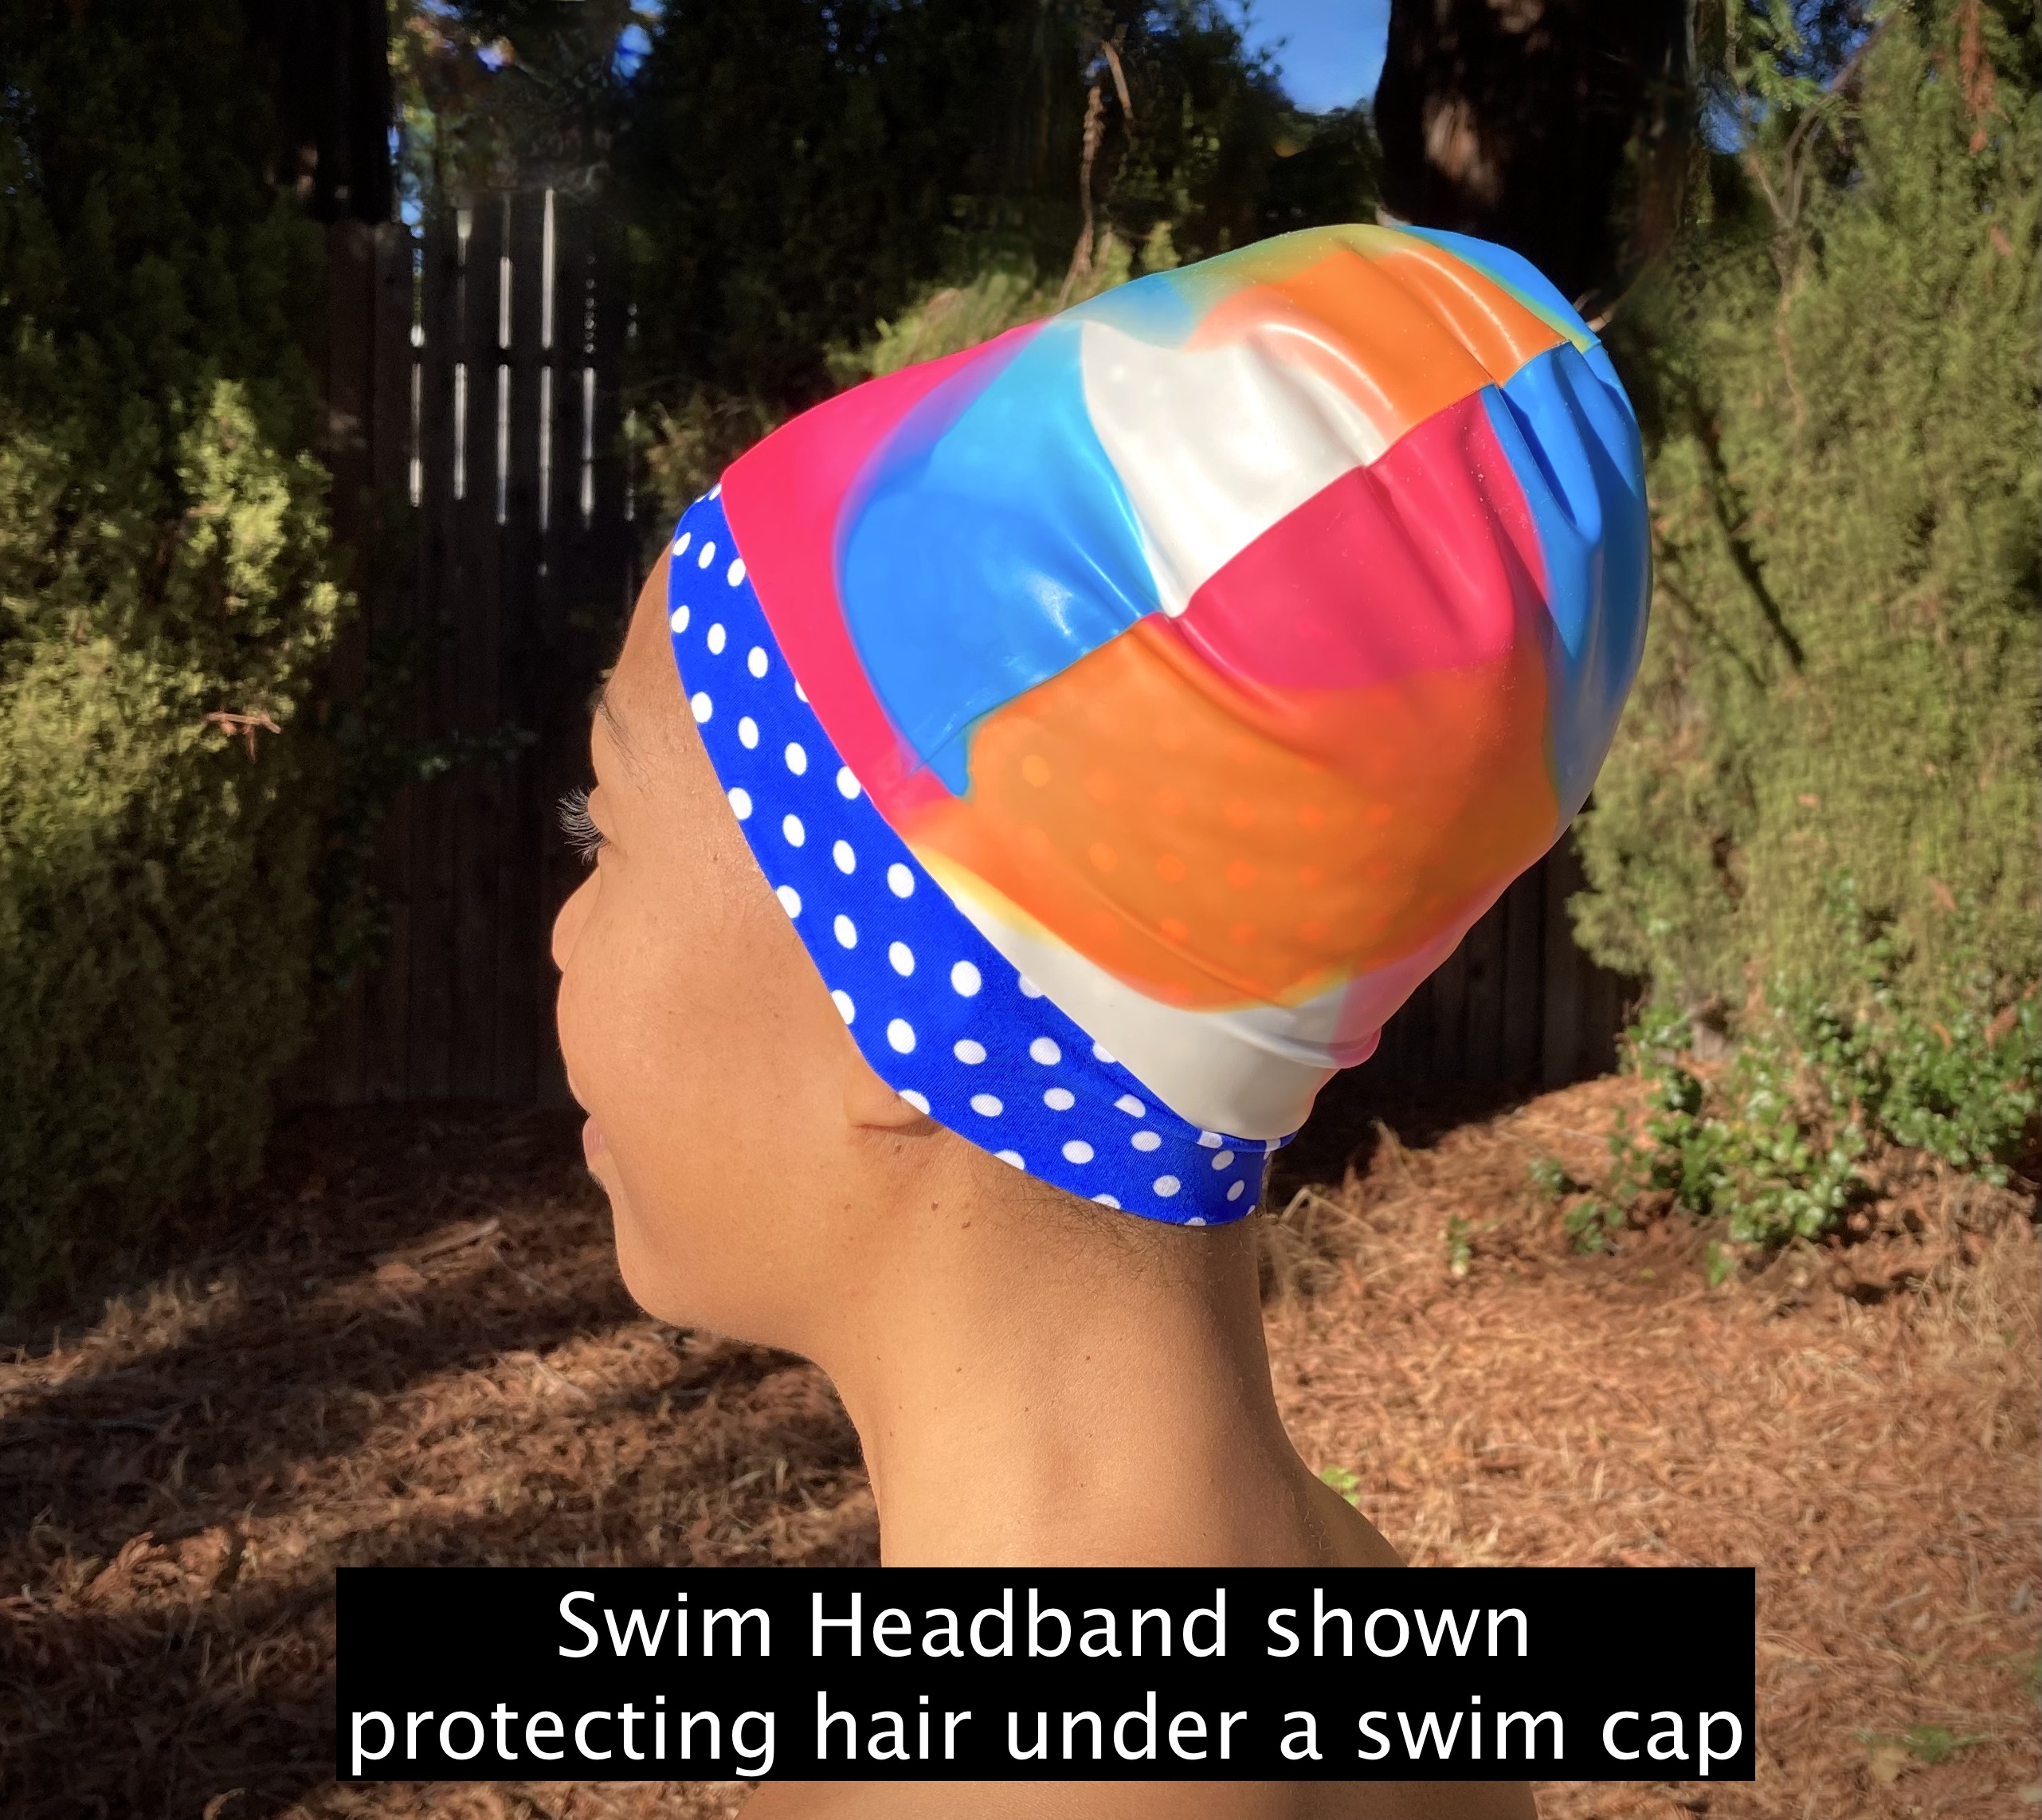 Swim headband shown protecting hair under a swim cap